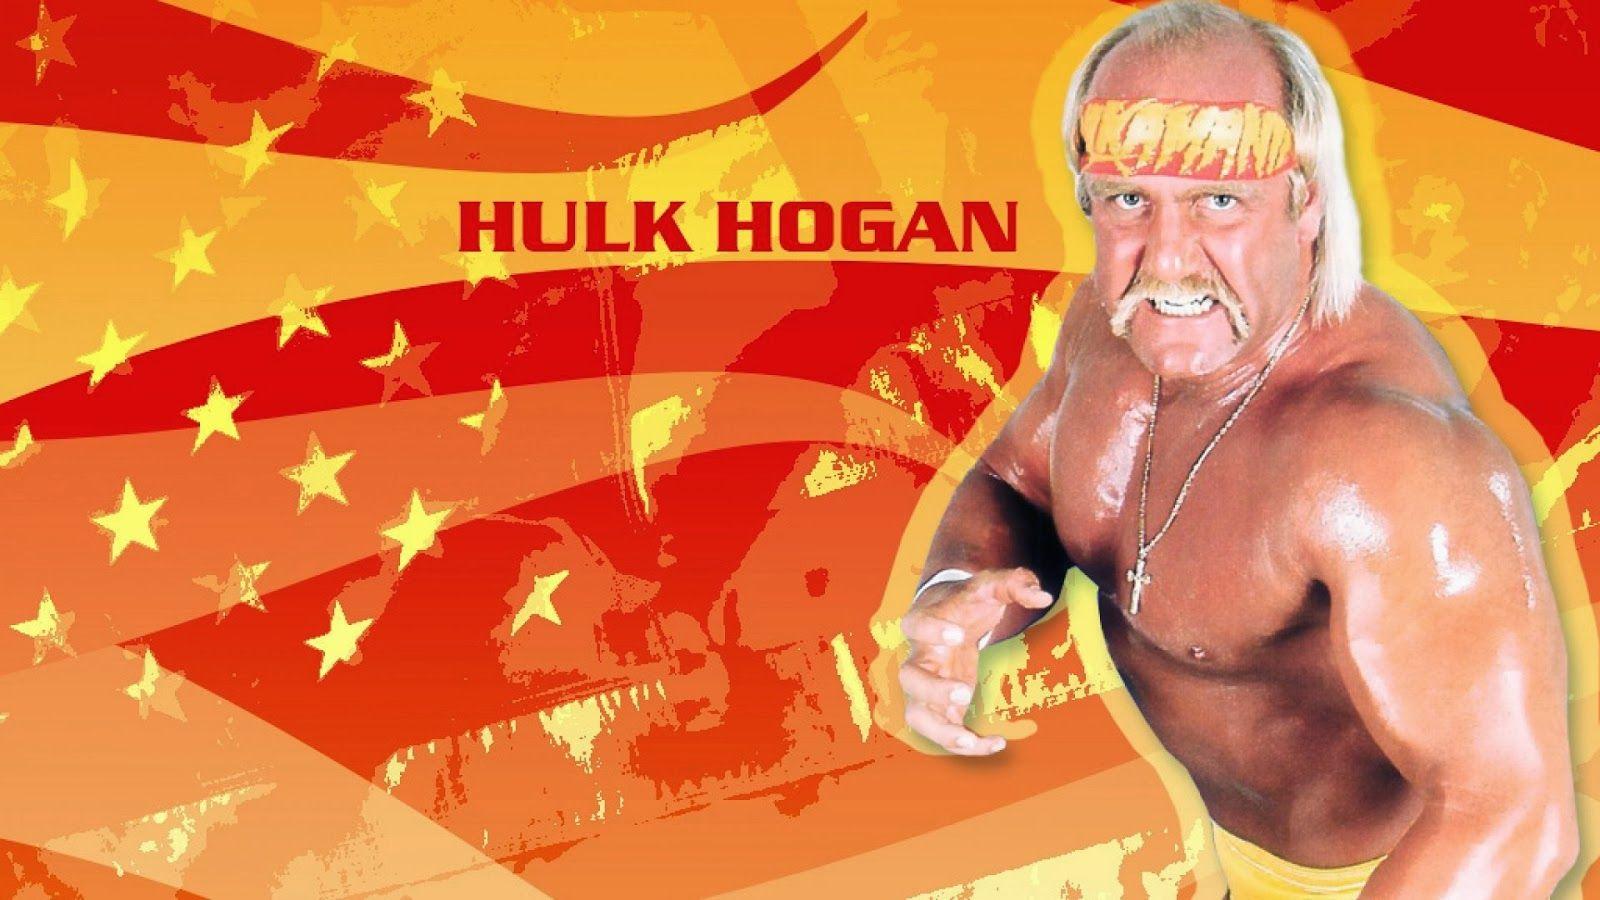 Hulk Hogan HD Wallpaper Free Download HD Free Wallpaper 2015